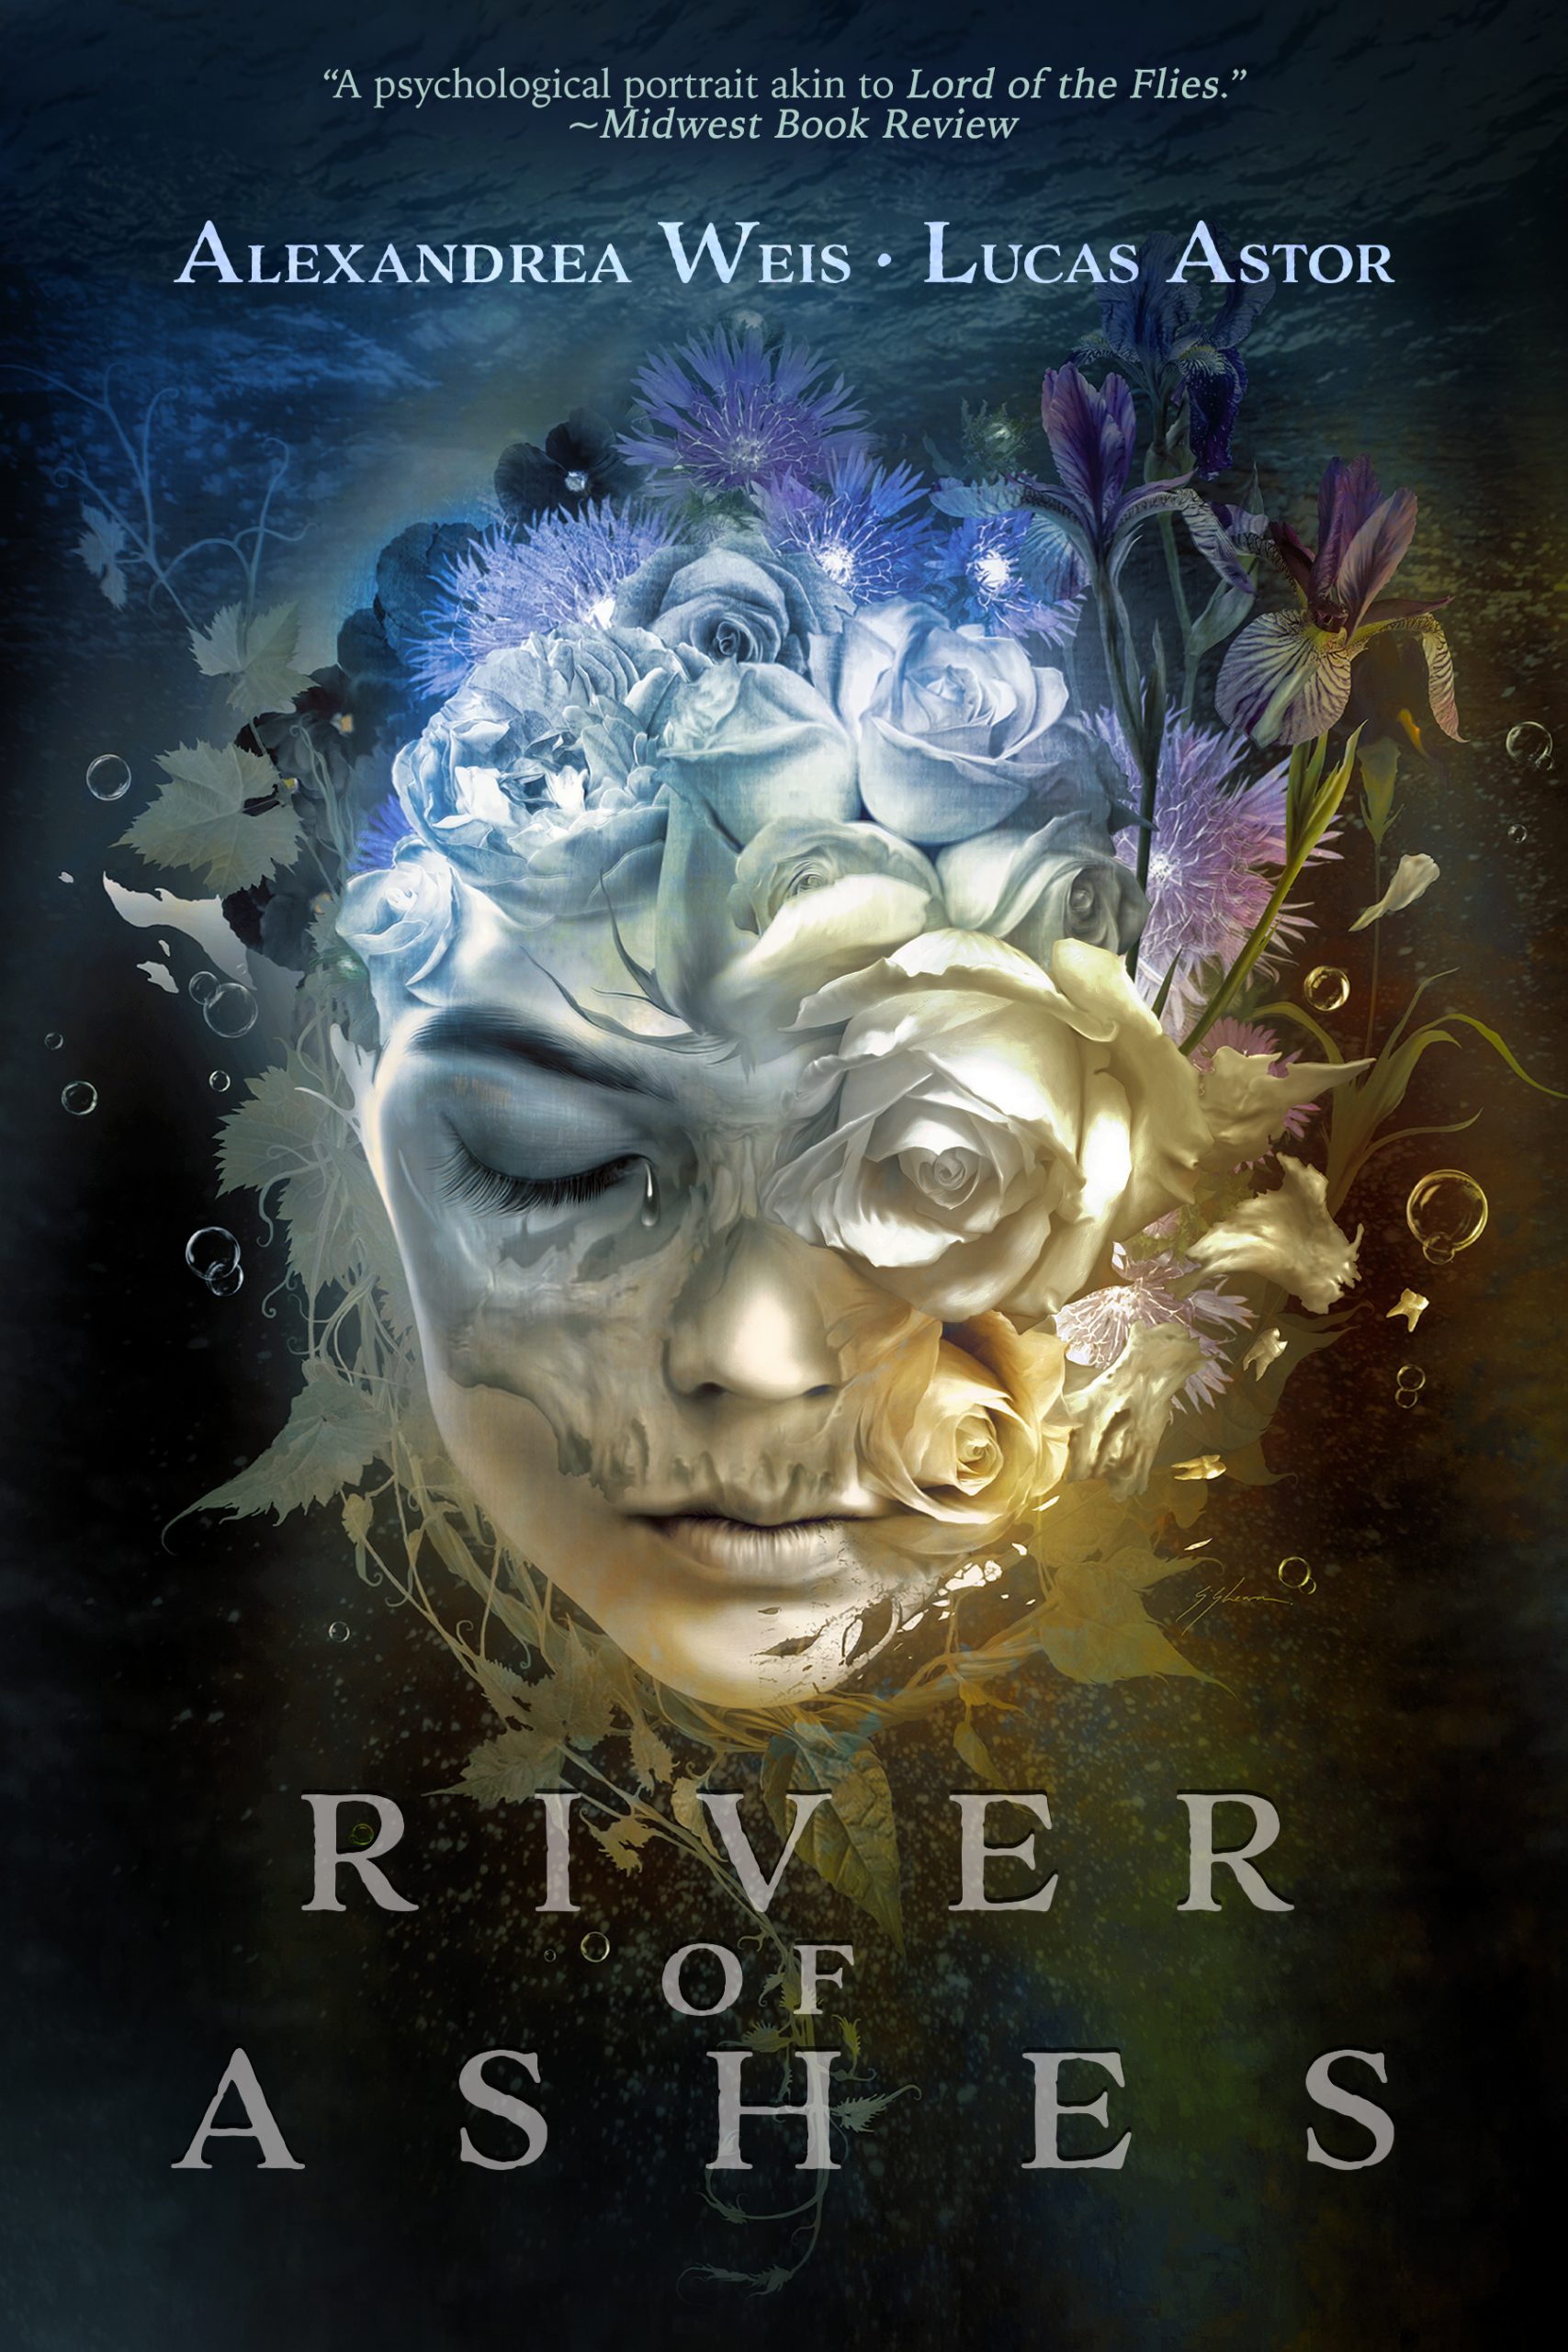 River of Ashes by Alexandrea Weis & Lucas Astor